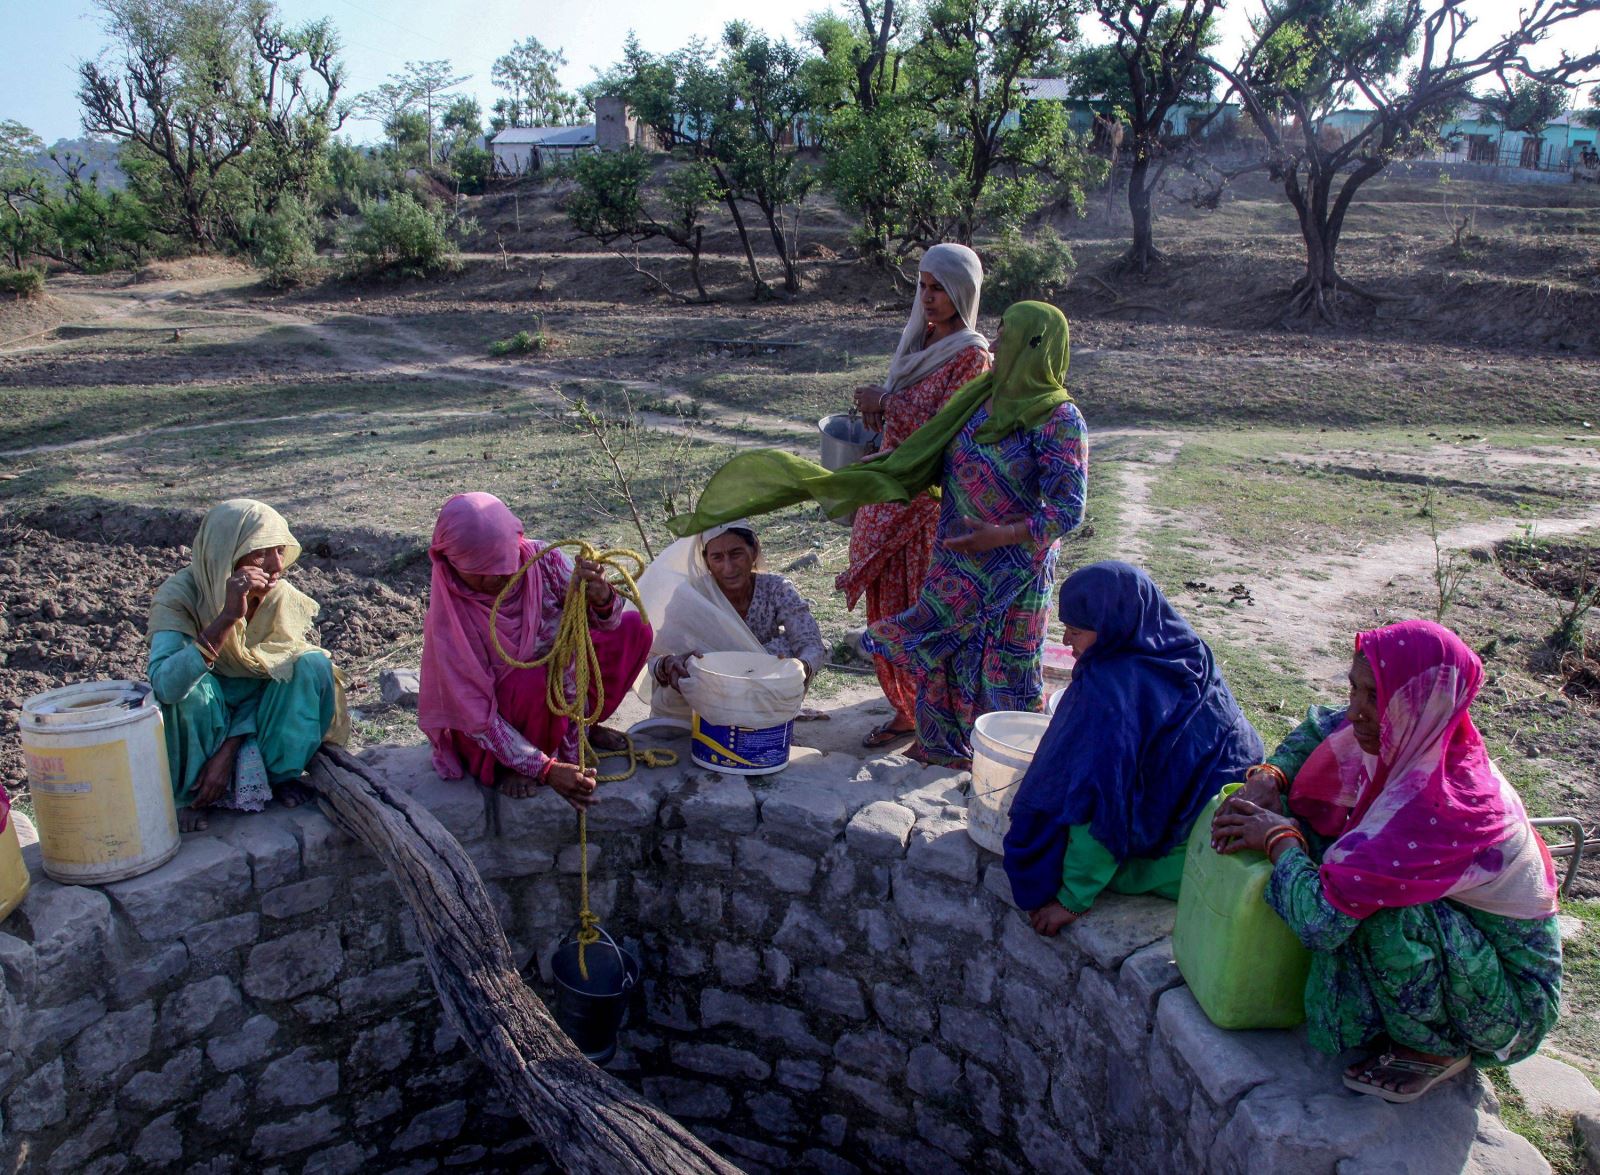 India: Temperatures pass 50 degrees Celsius, water shortages alert